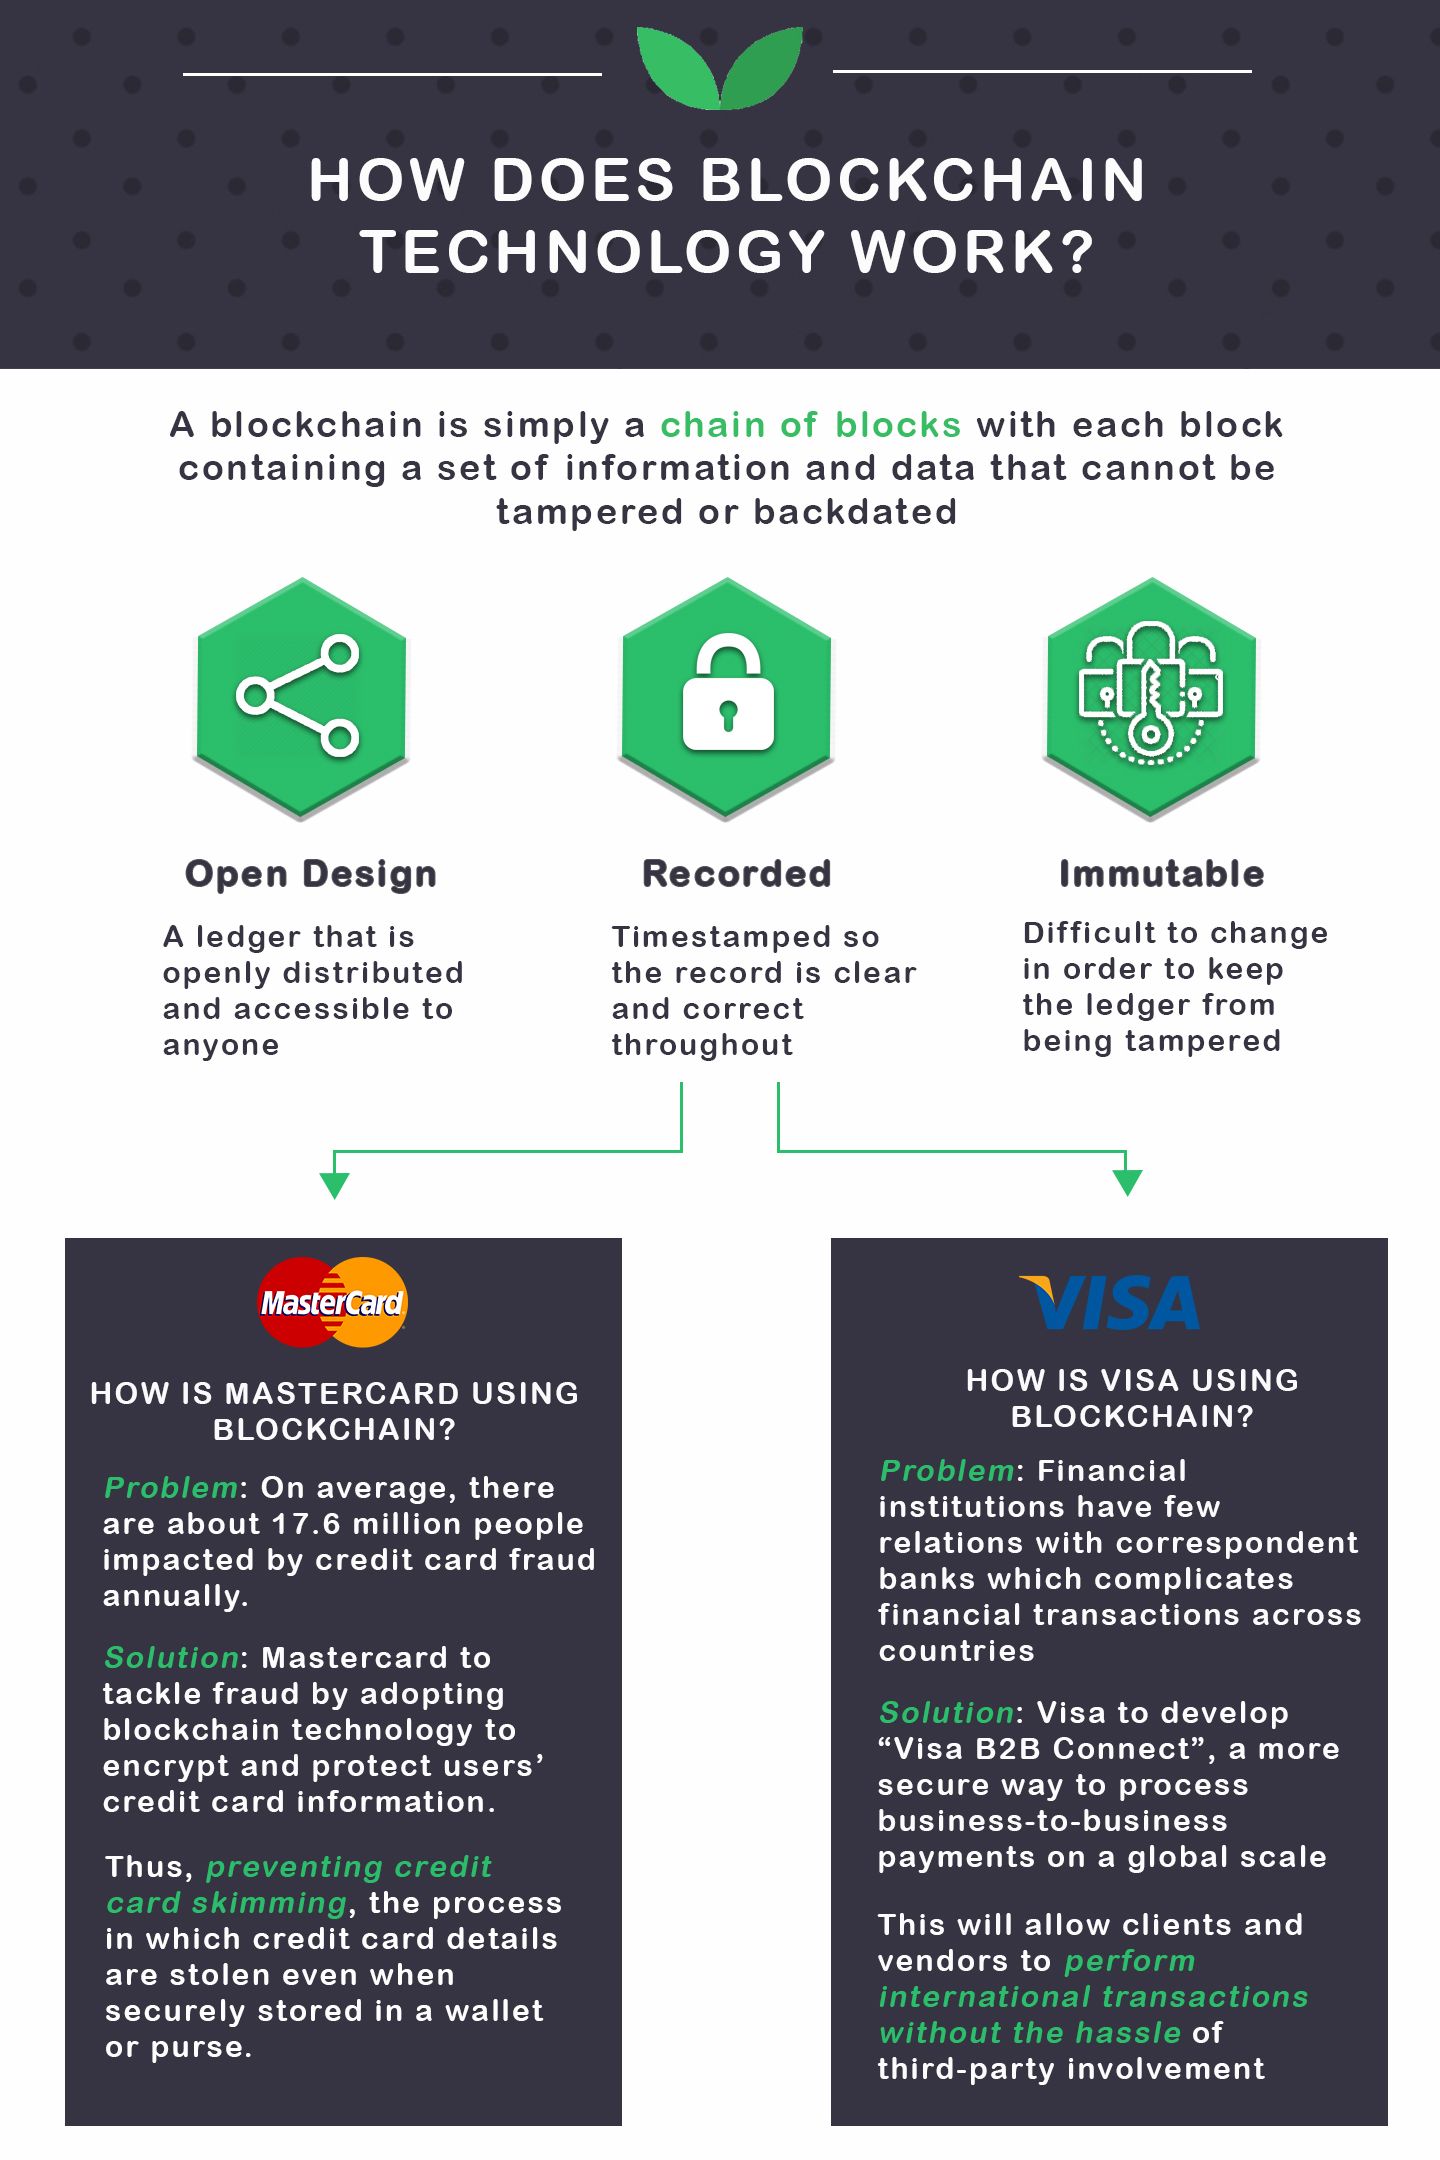 Visa vs Mastercard blockchain use cases